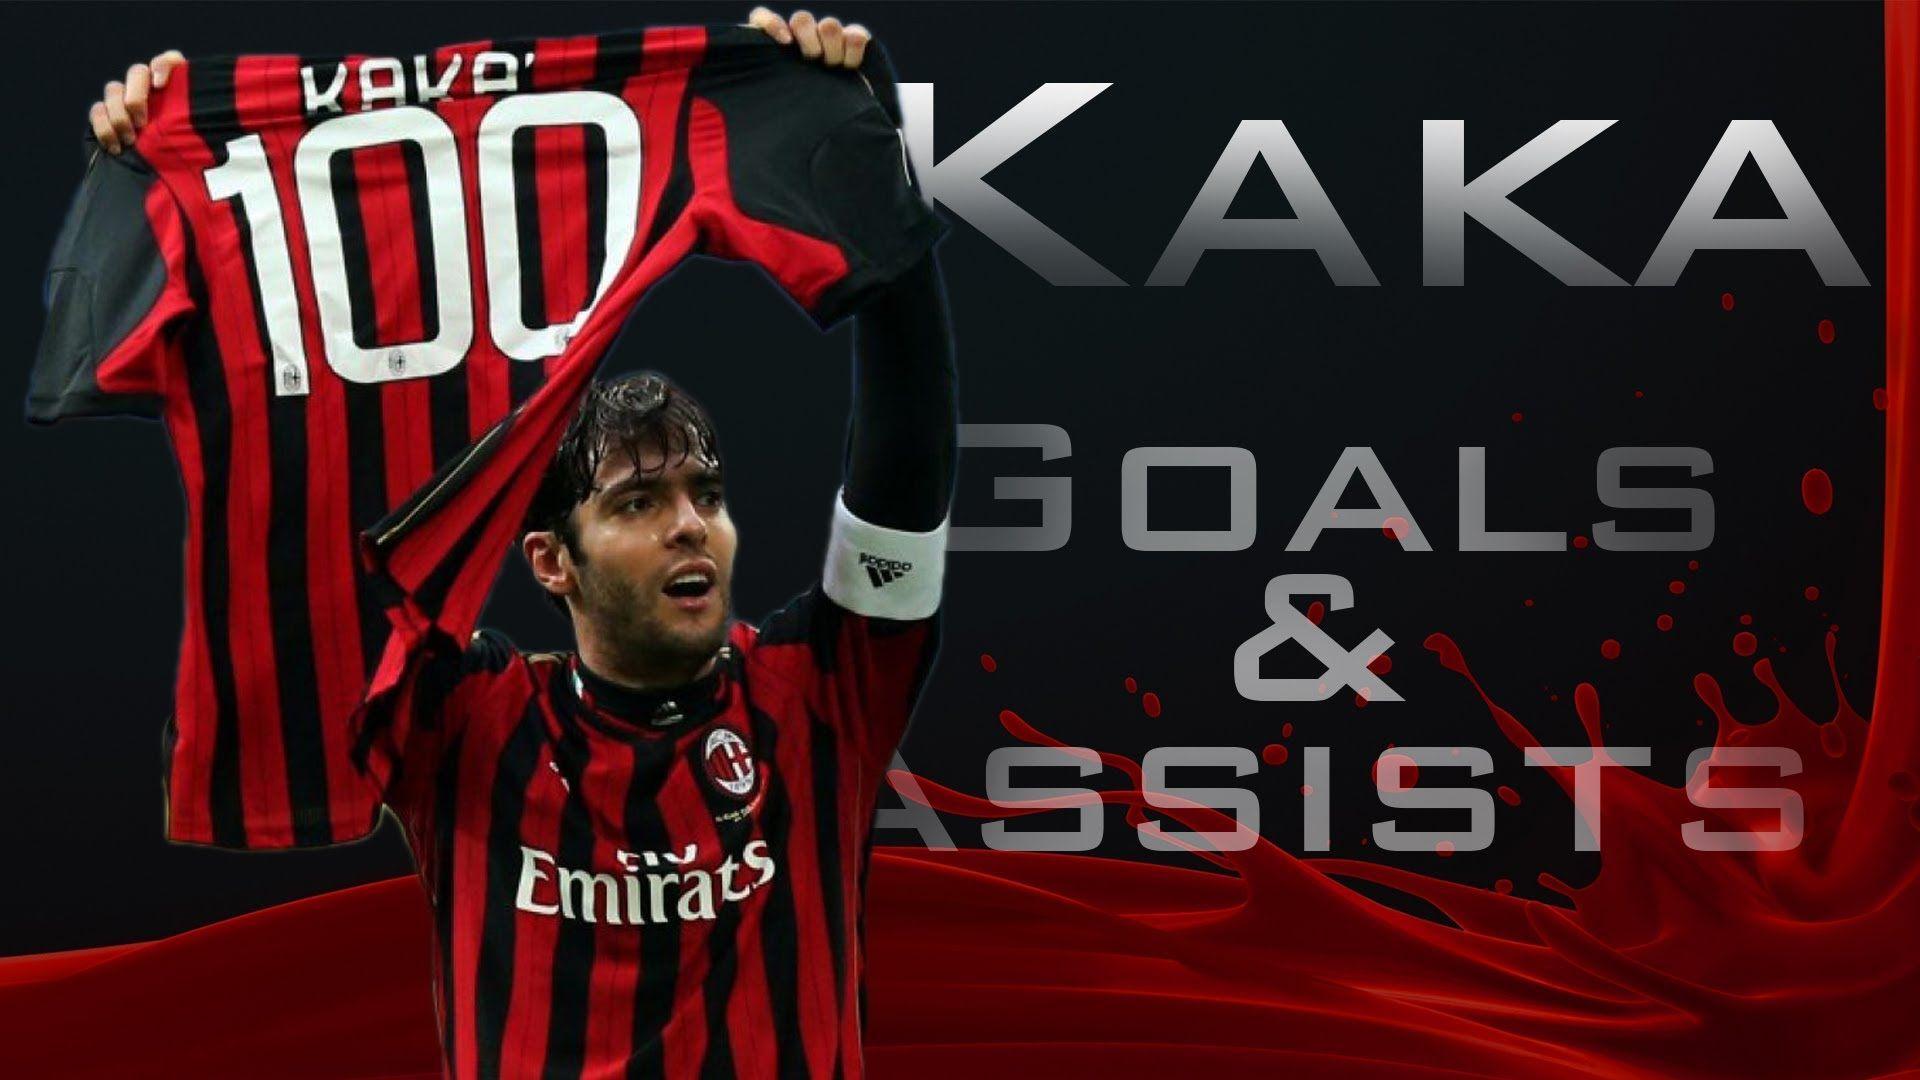 Ricardo Kaka & Assists Milan 2014